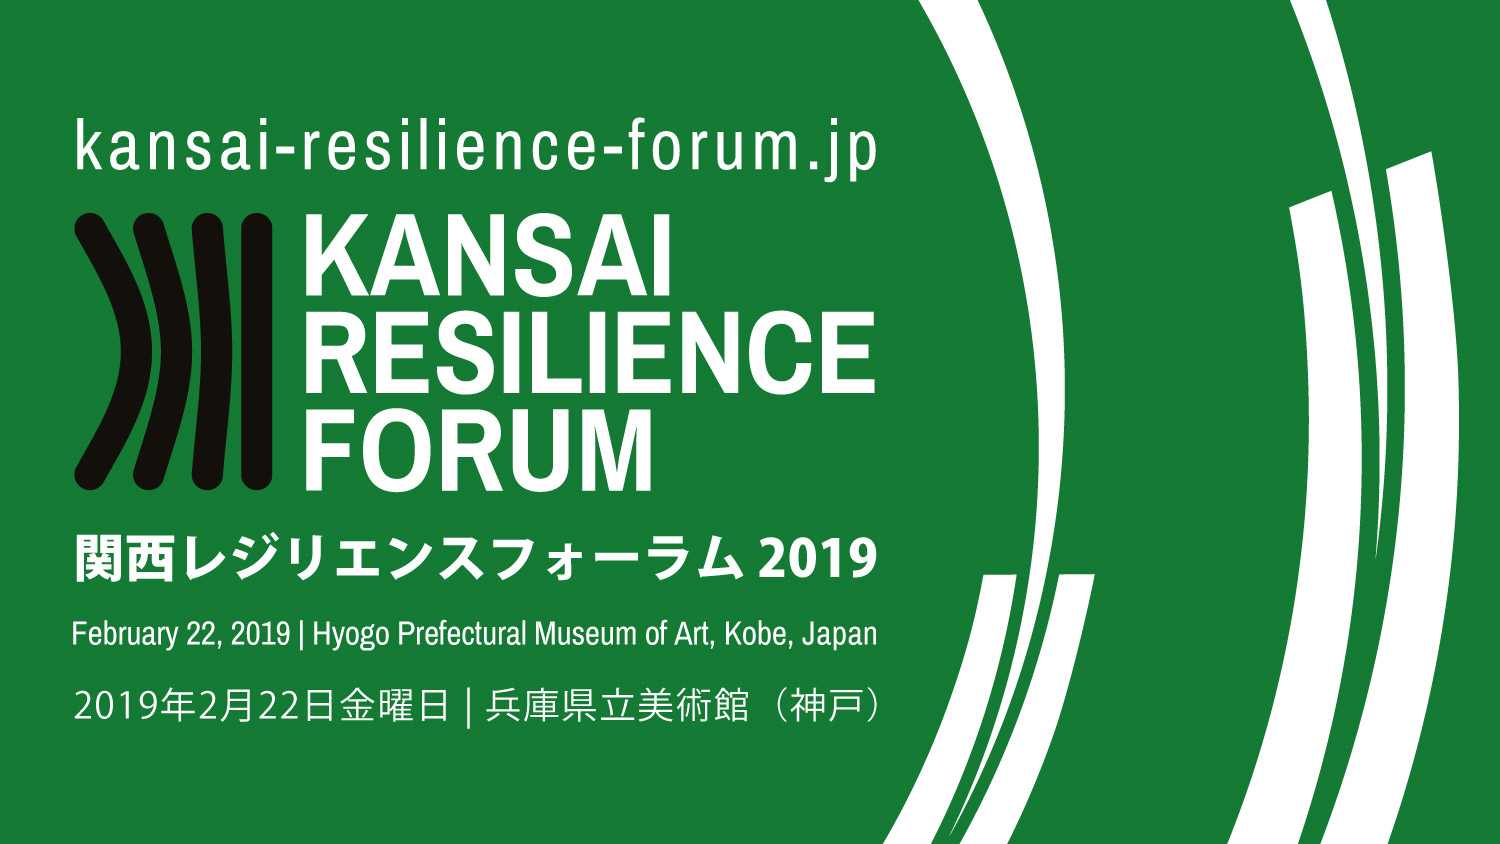 The Kansai Resilience Forum 2019